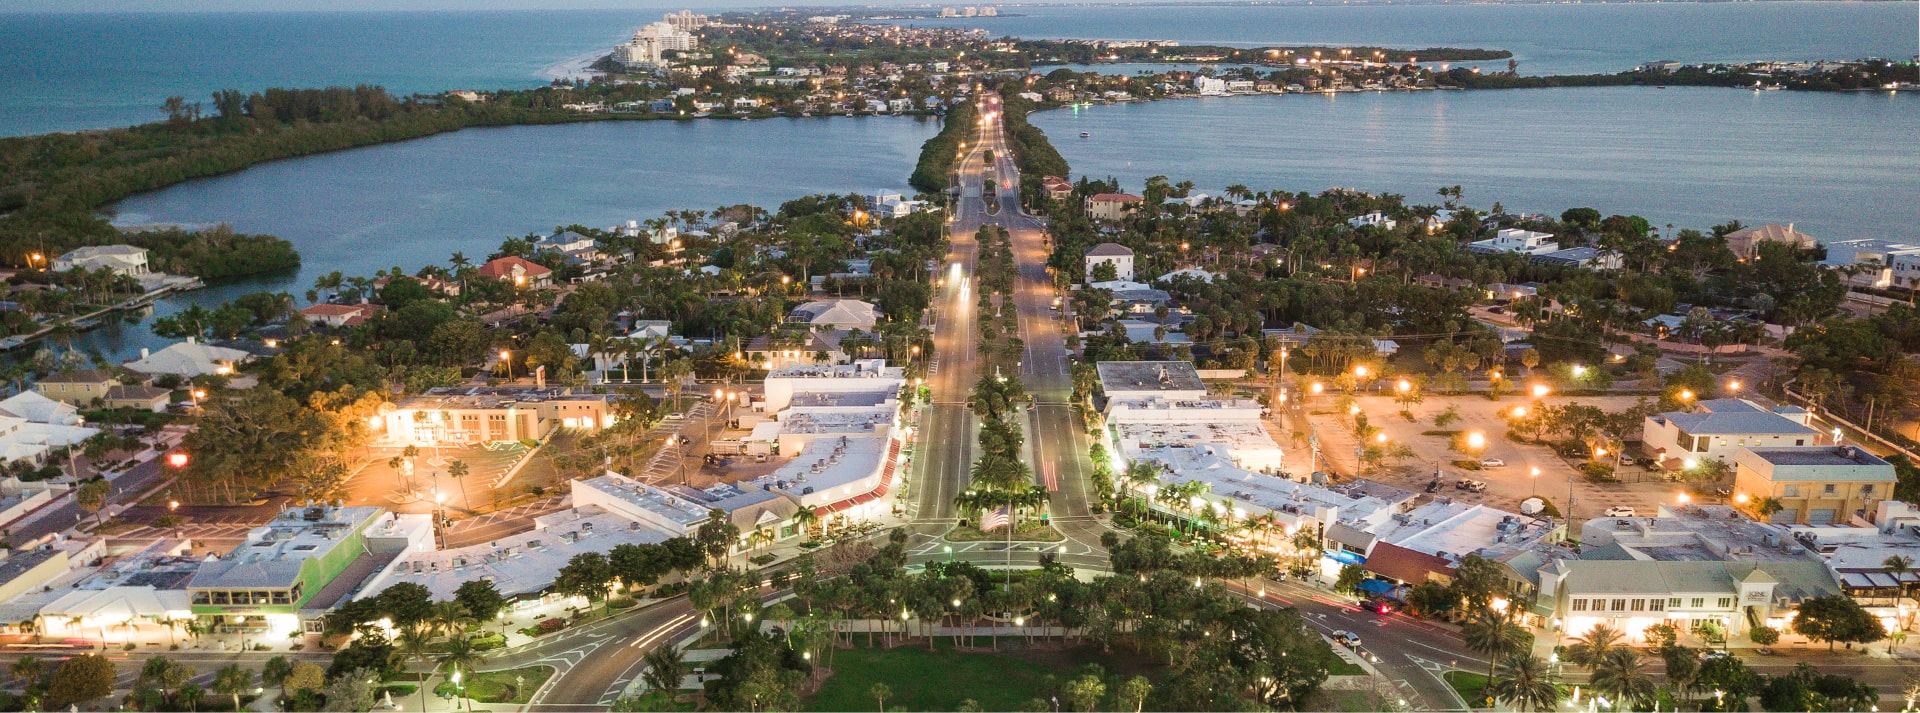 Aerial photo of Sarasota Florida